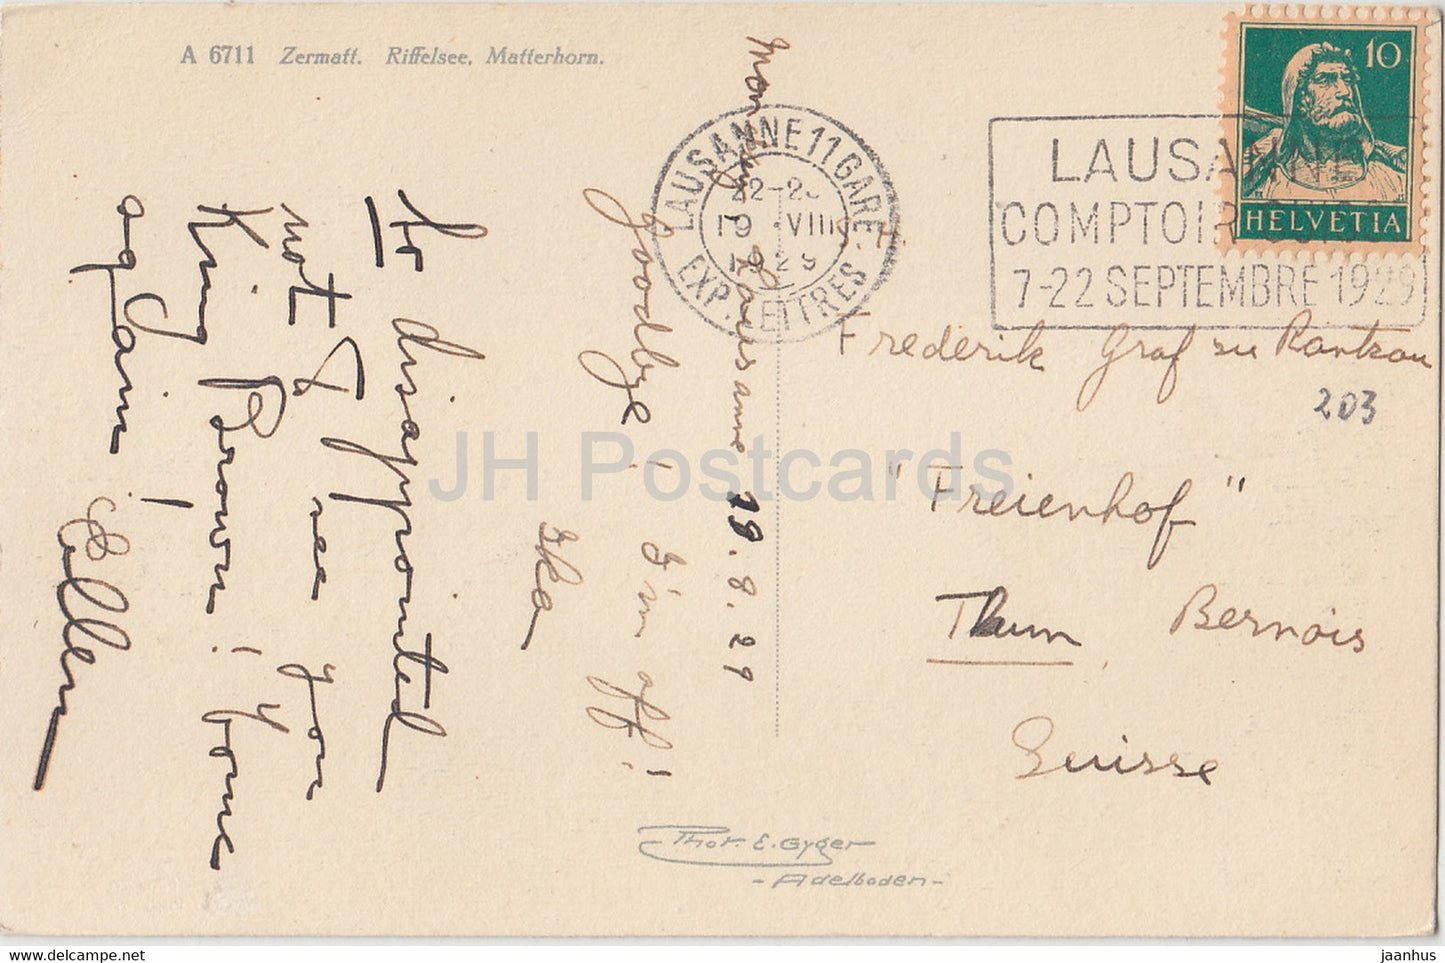 Zermatt - Riffelsee - Matterhorn - 6711 - old postcard - 1929 - Switzerland - used